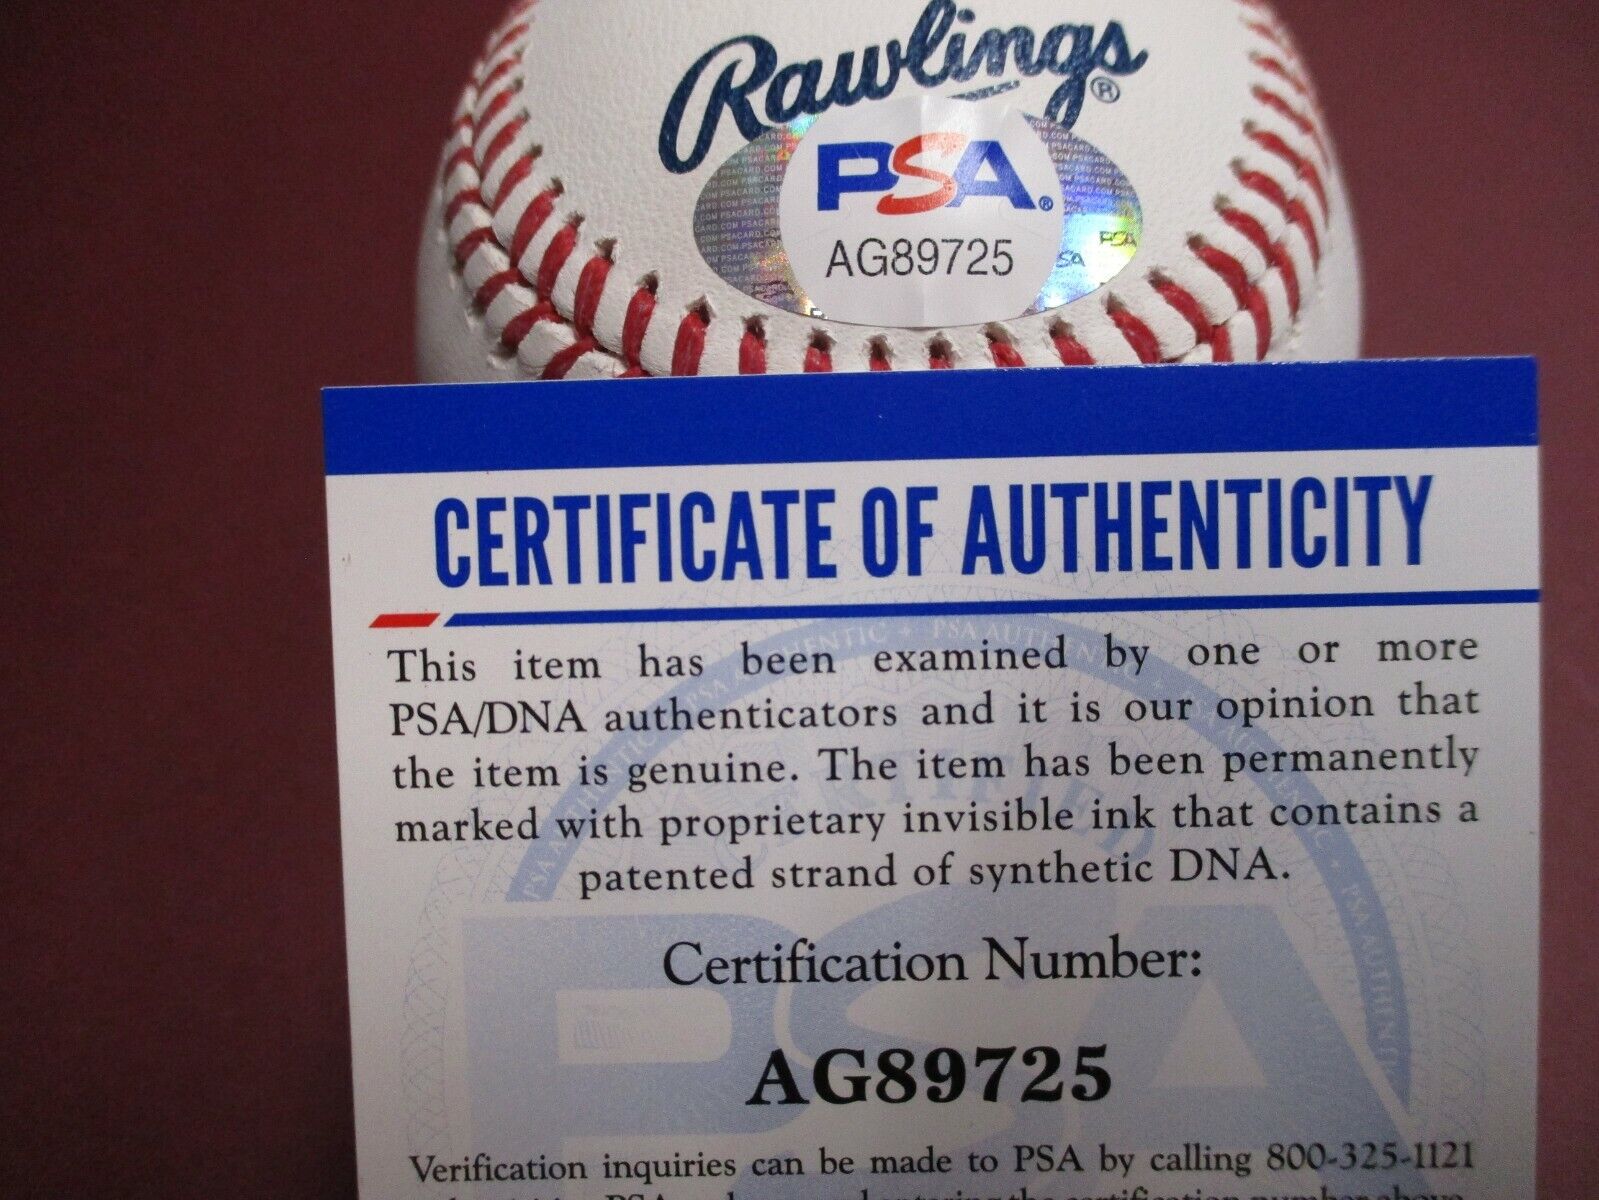 Robinson Cano NY Mets Autographed Official Ball Signed Baseball PSA COA